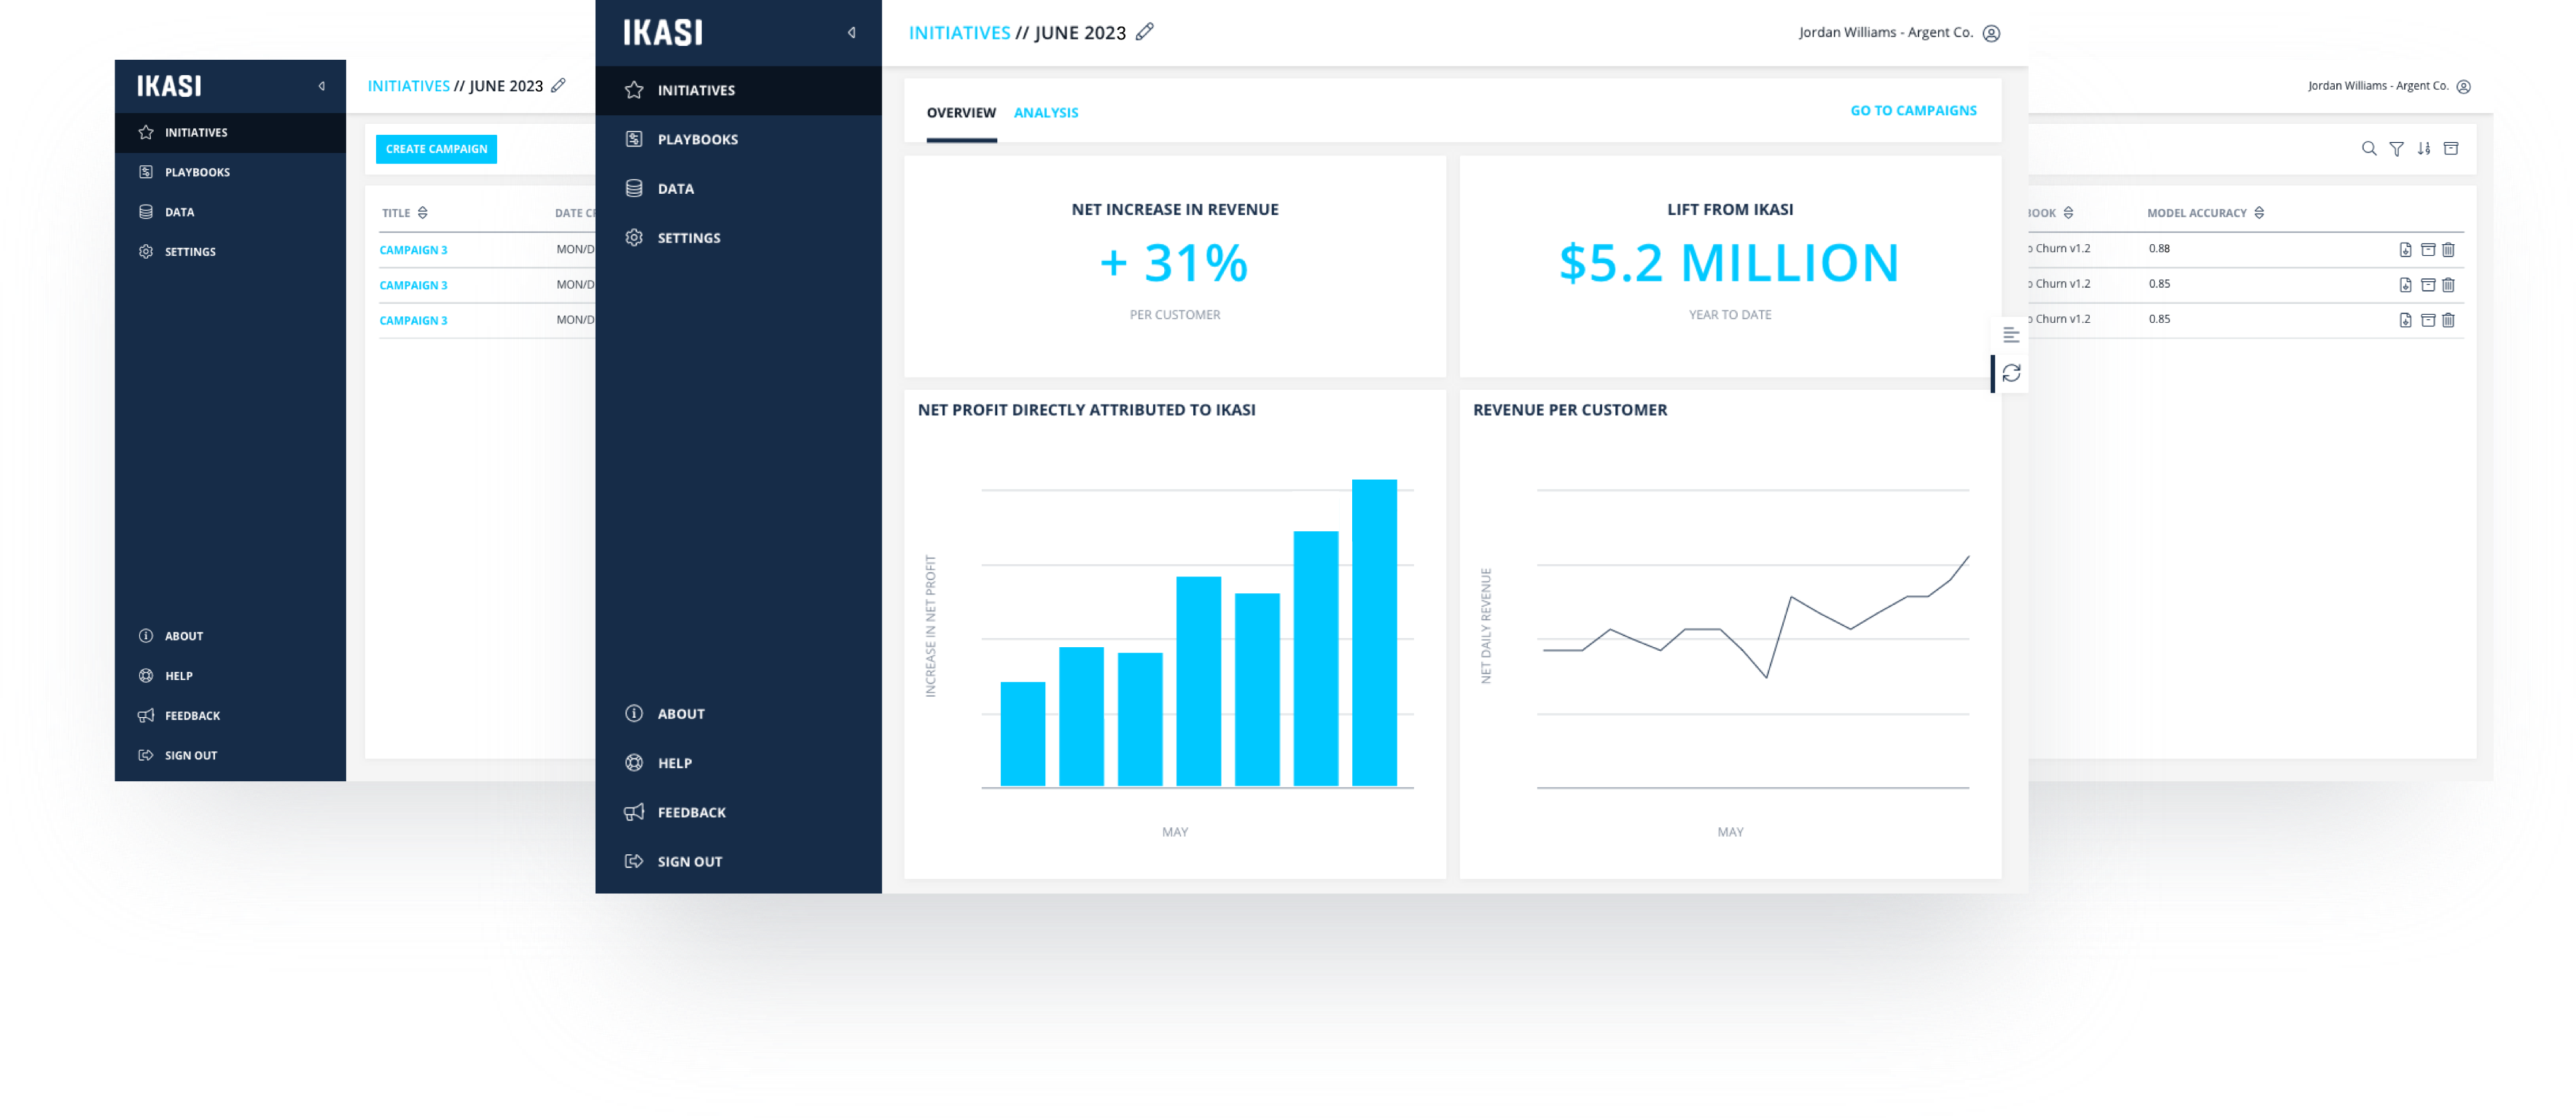 IKASI AI Platform screenshots showing revenue increases